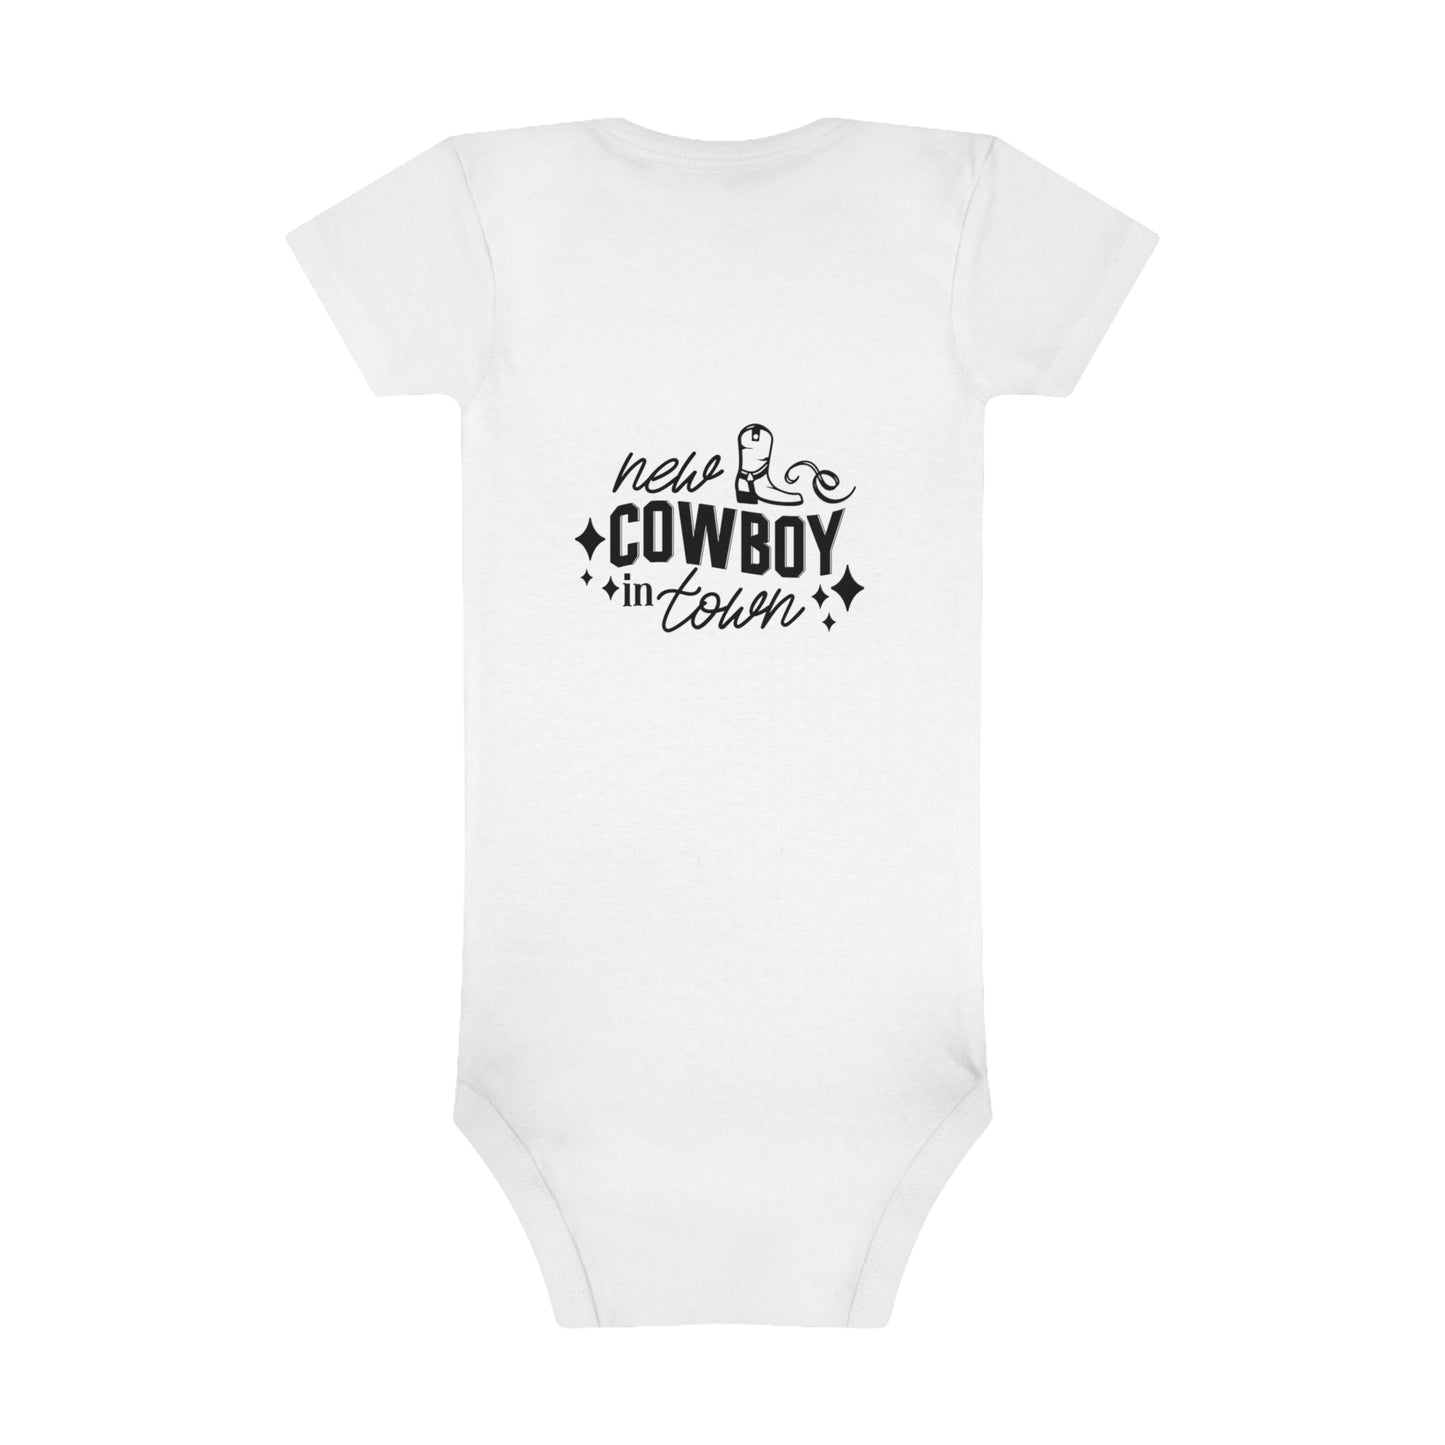 Baby New Cowboy Short Sleeve Onesie®